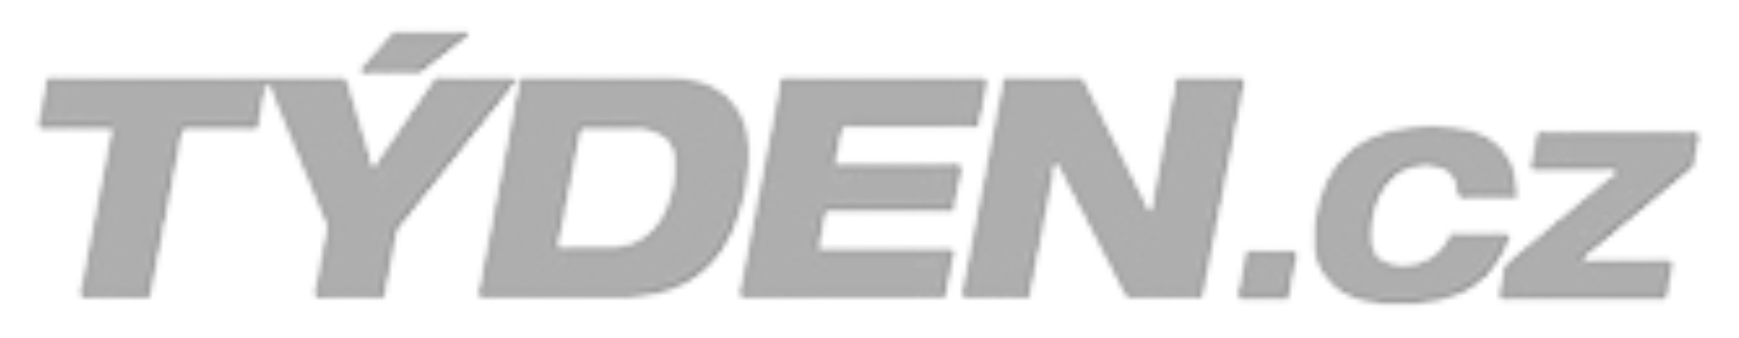 Tyden logo